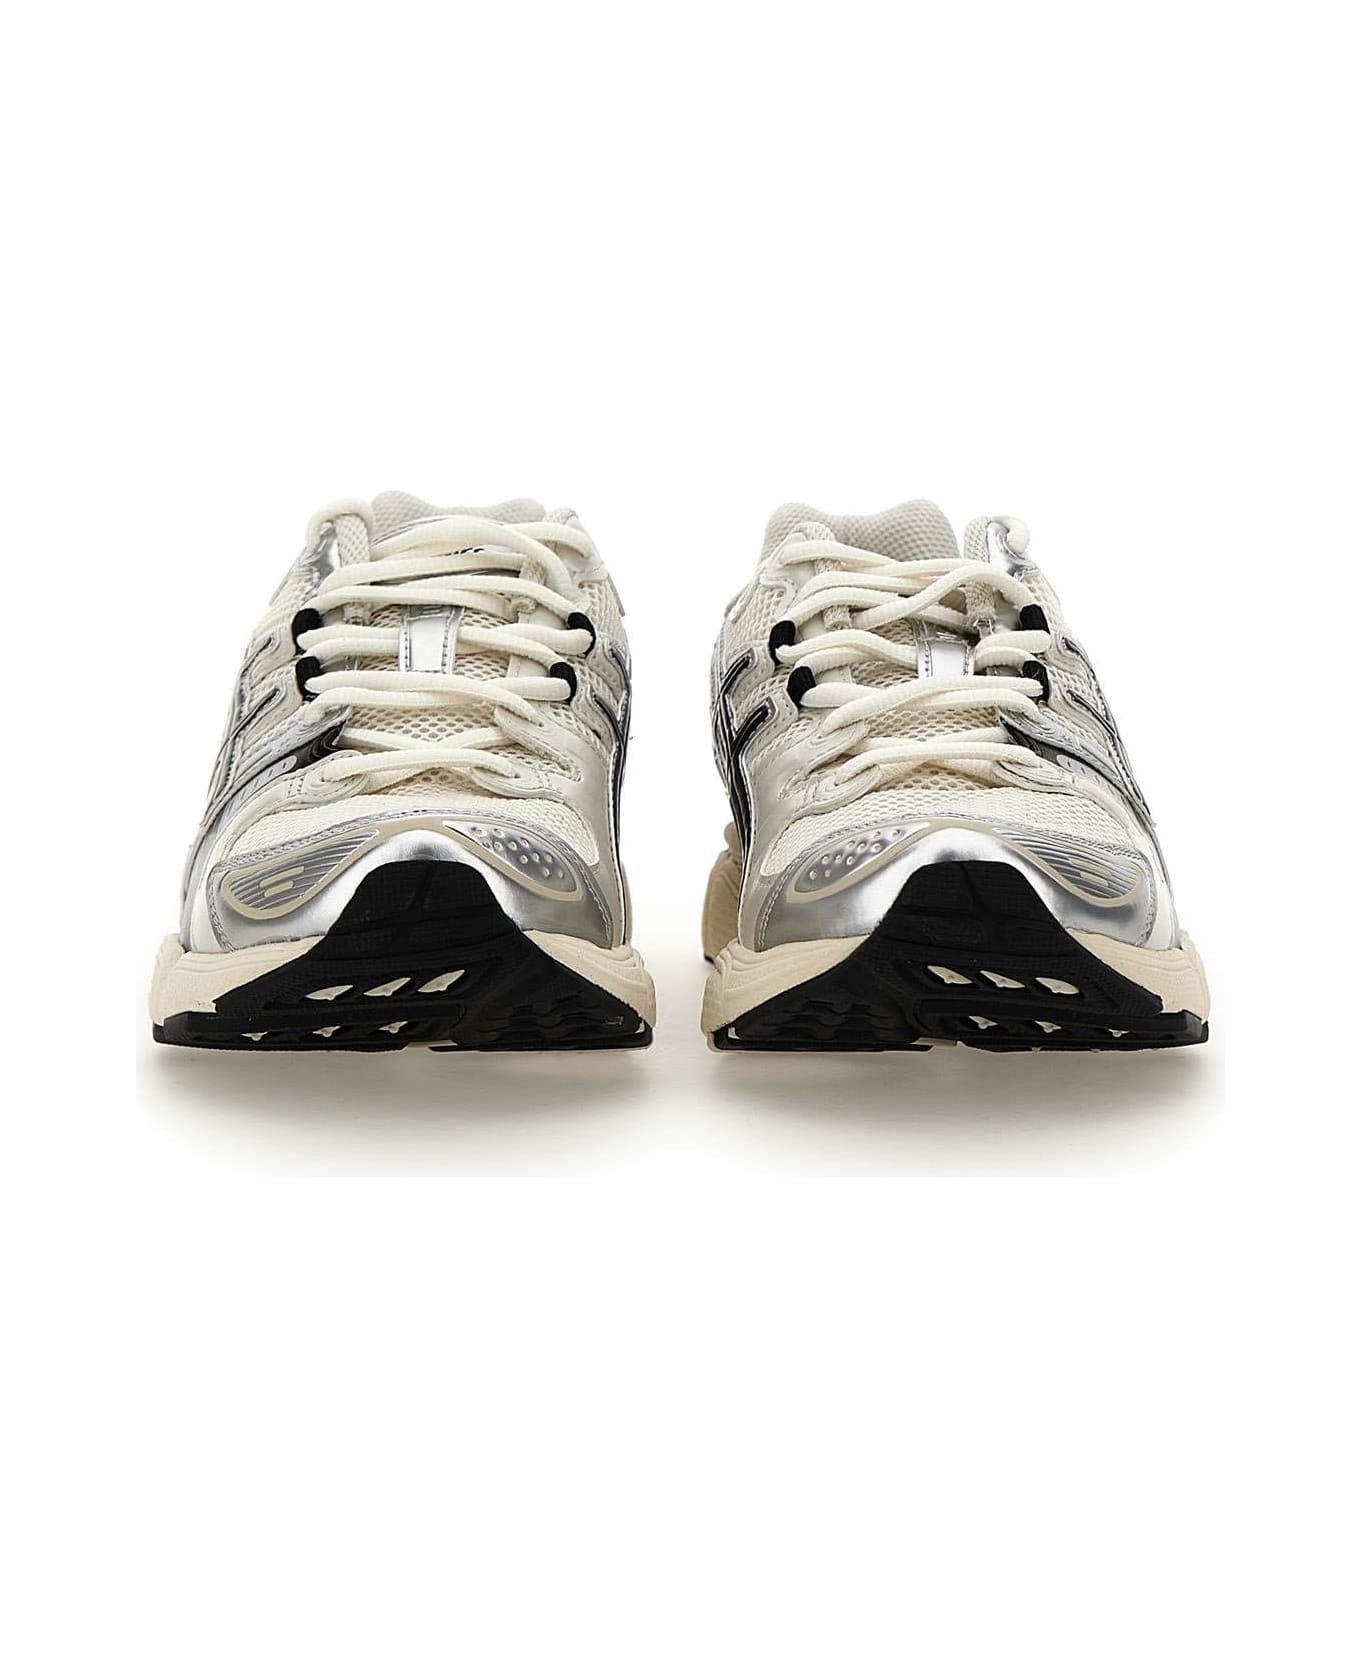 Asics "gel Nimbus 9" Sneakers - SILVER/BLACK/WHITE